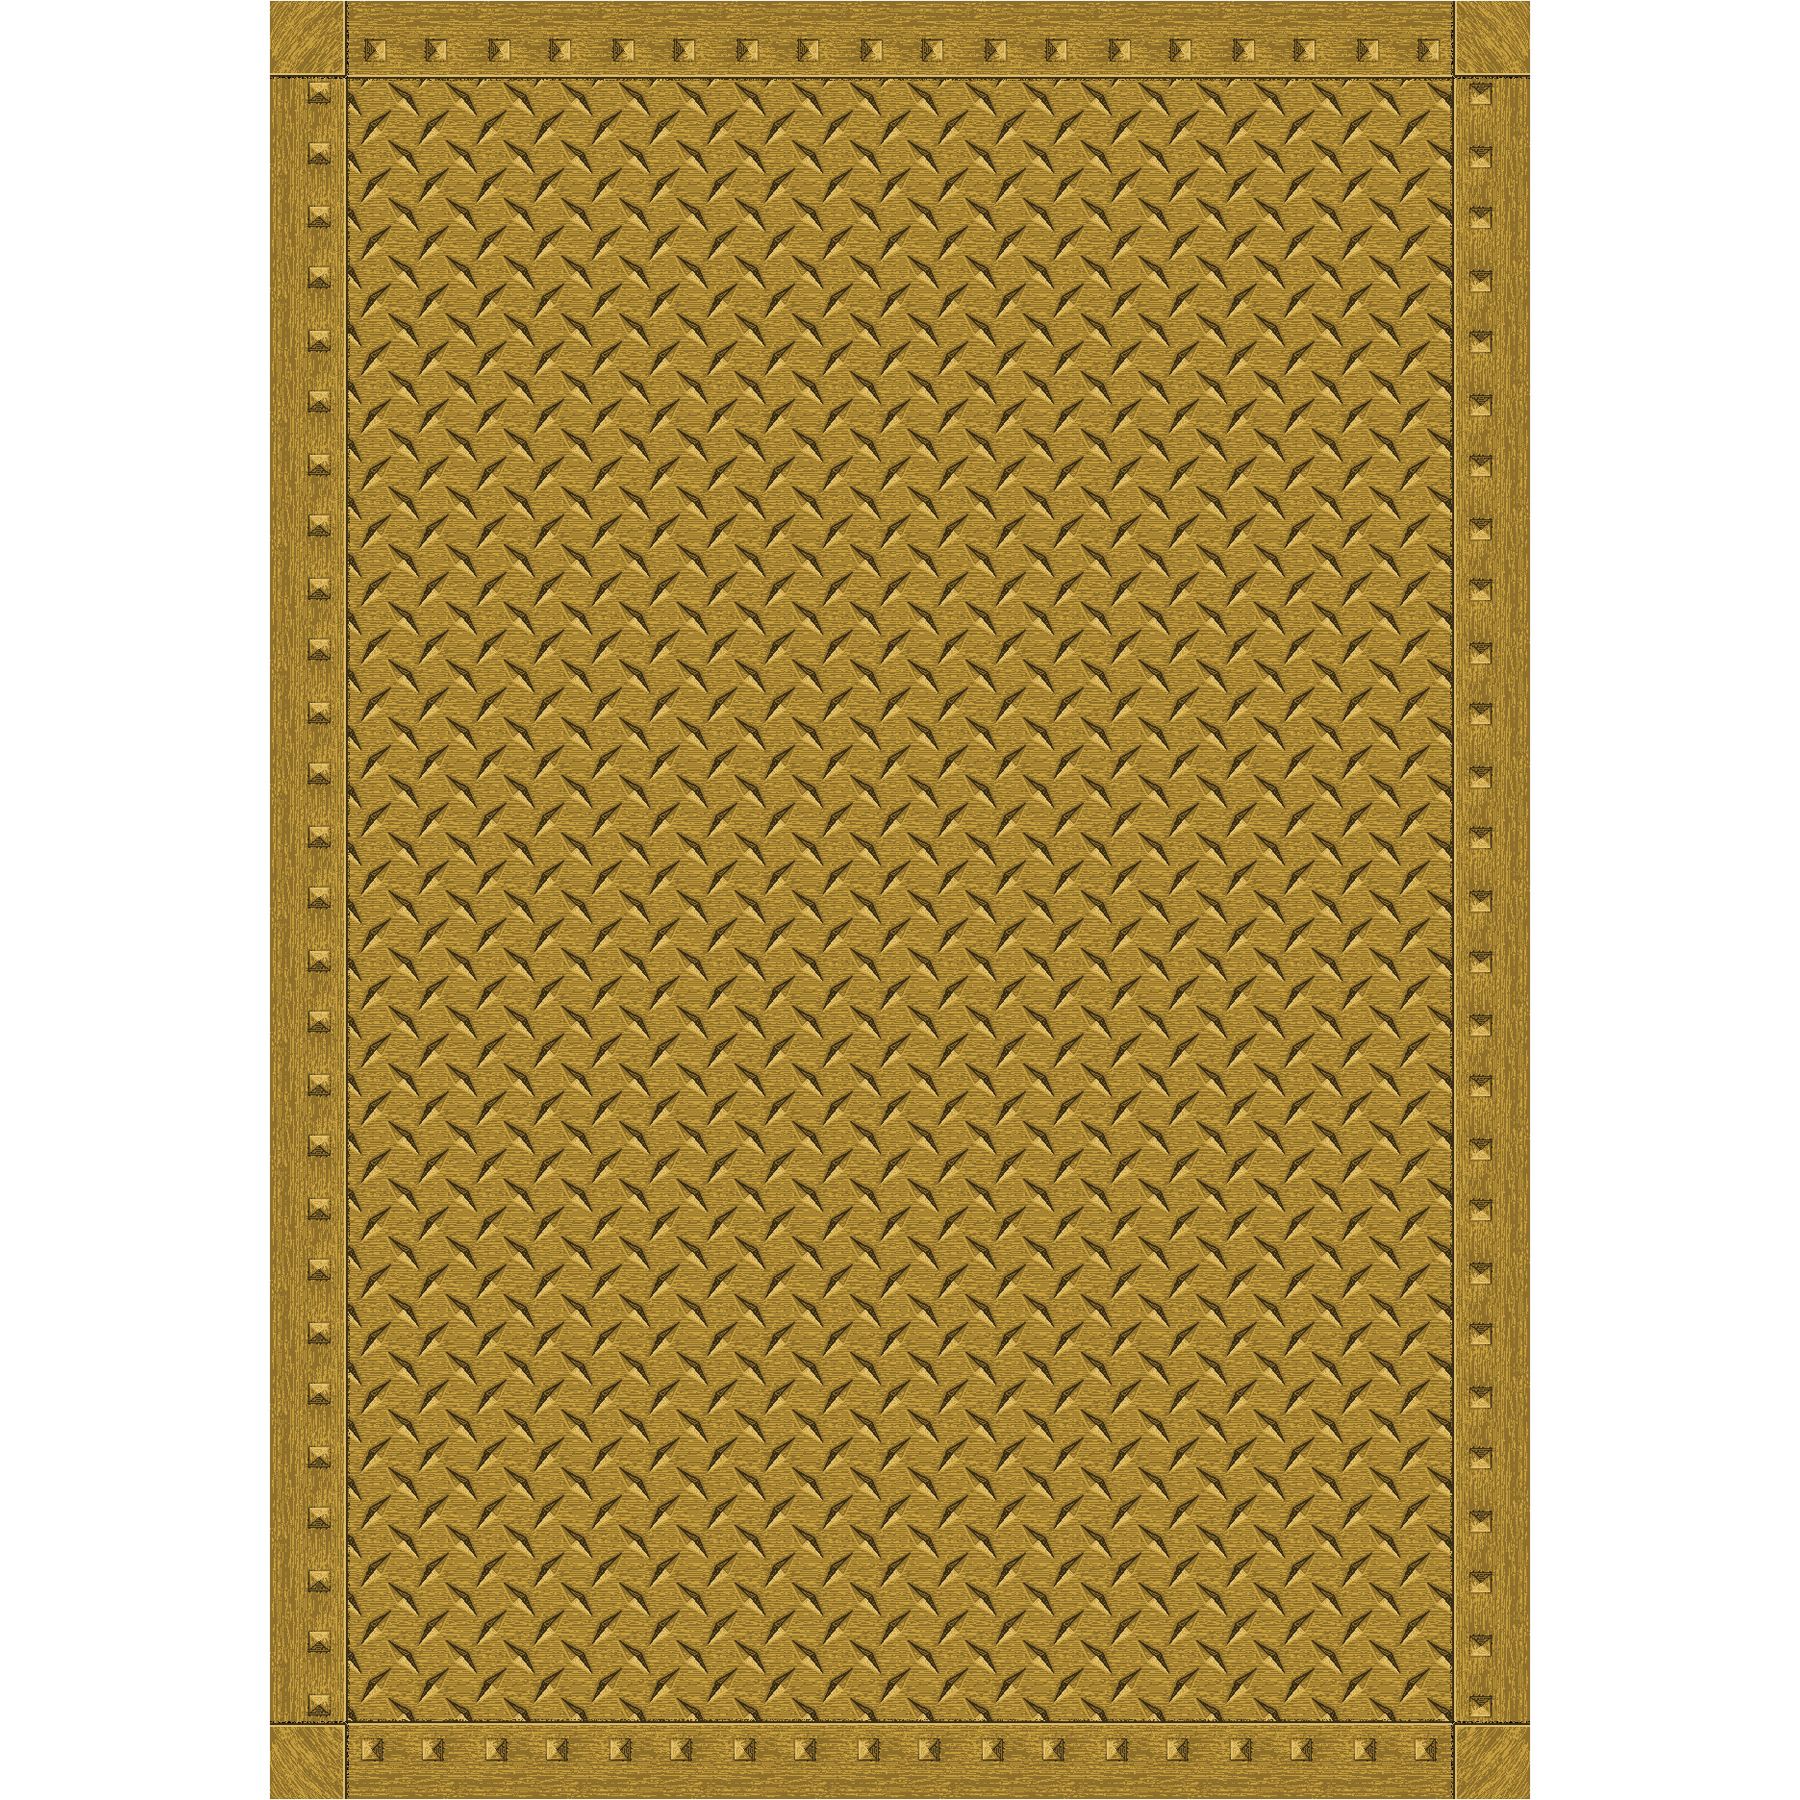 Joy Carpets Diamond Plate 5'4" x 7'8" Area Rug